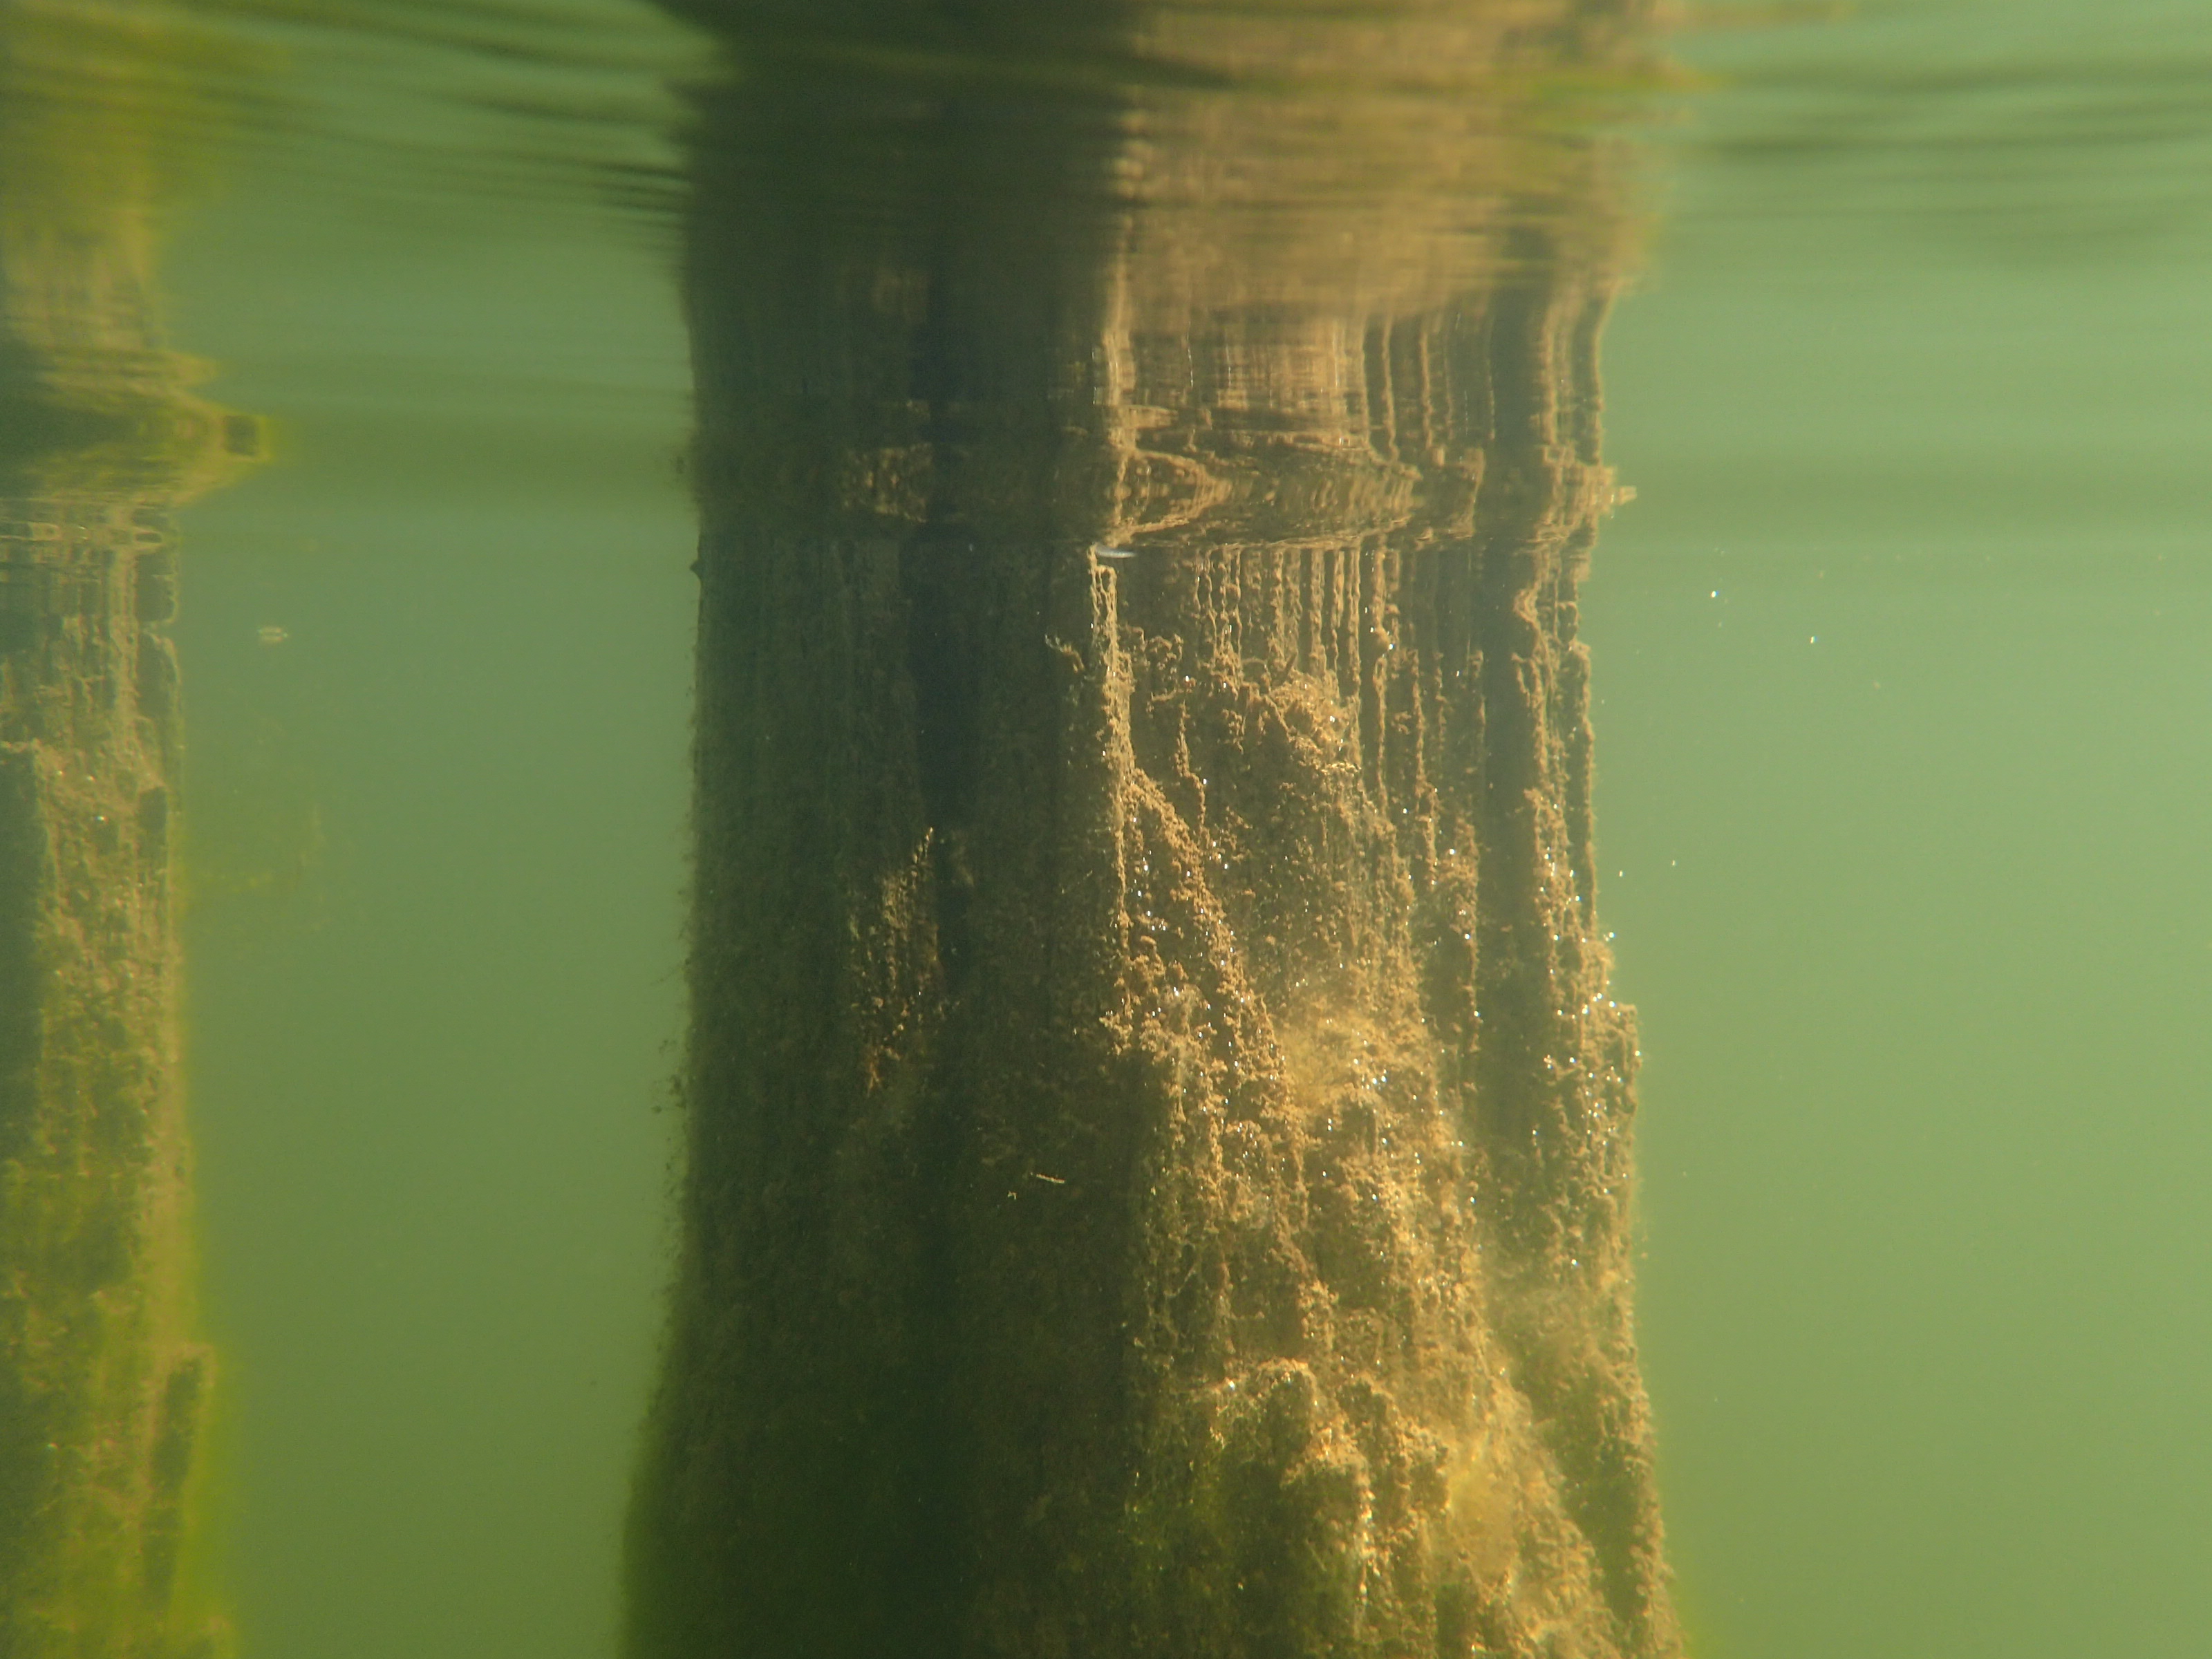 Underwater tree trunks